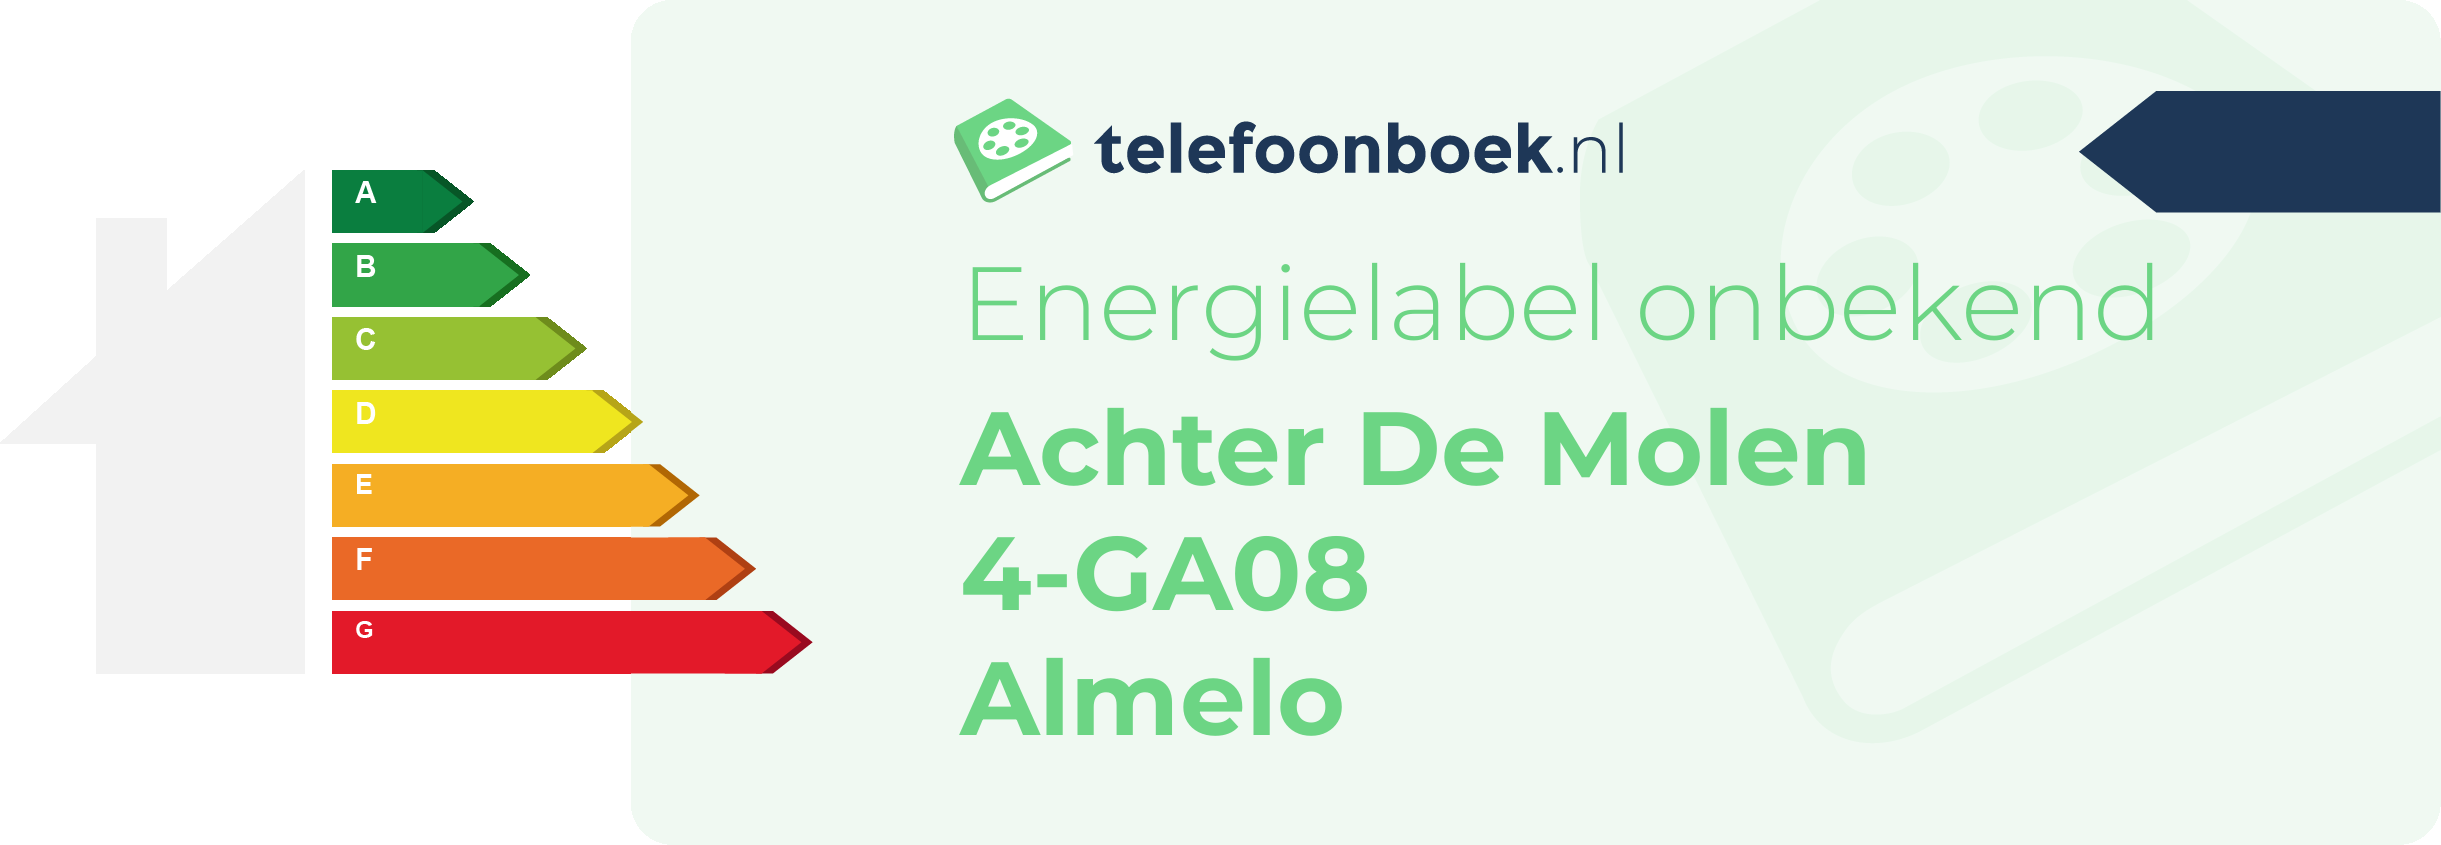 Energielabel Achter De Molen 4-GA08 Almelo